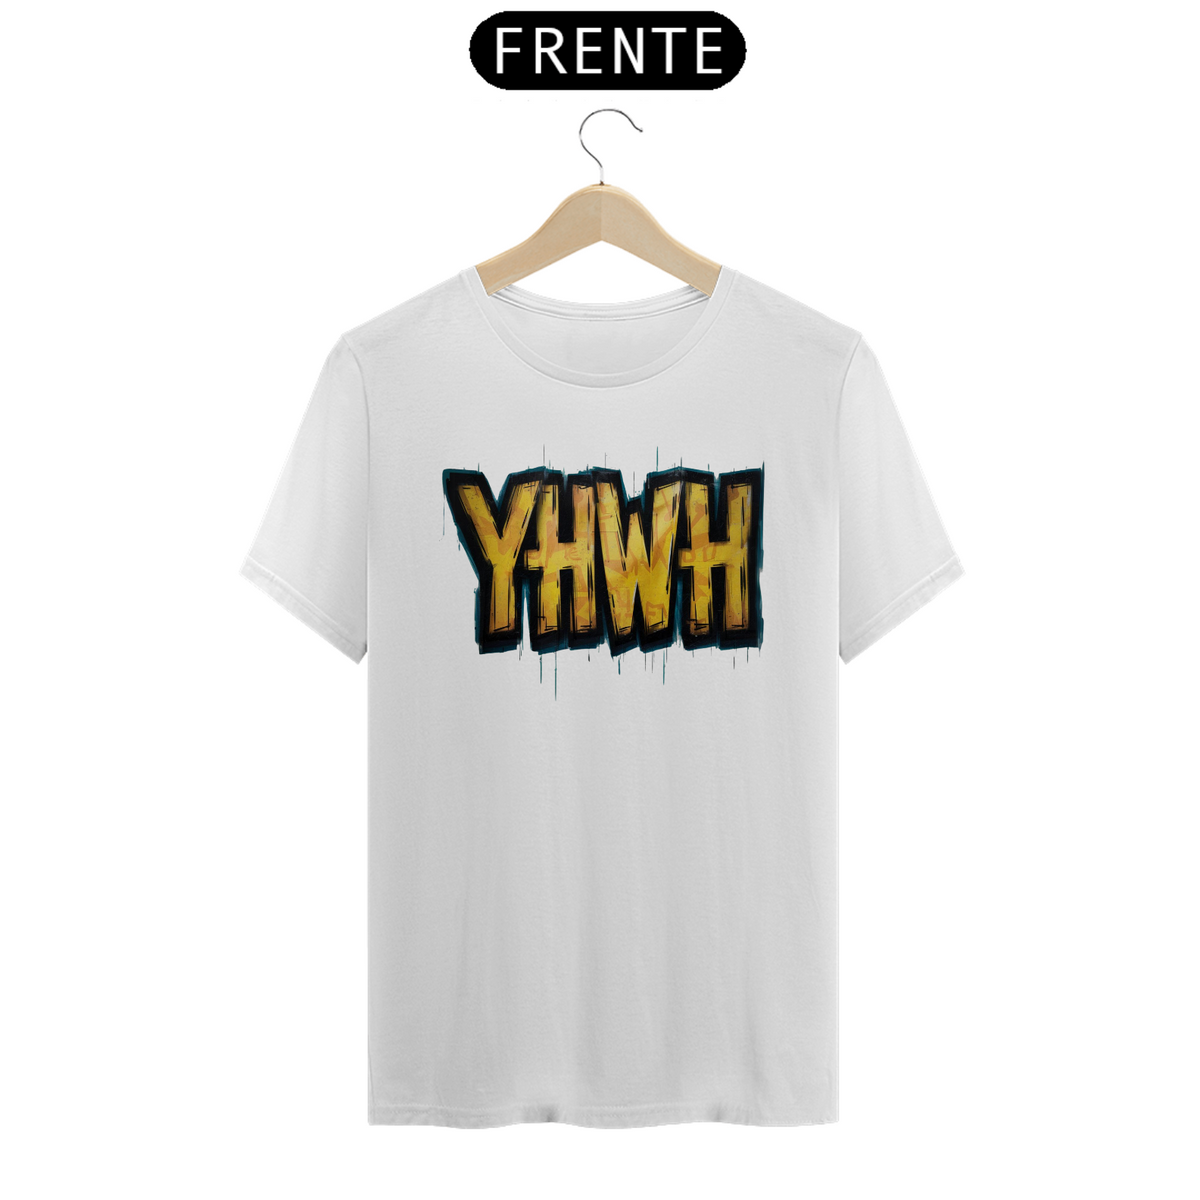 Nome do produto: Vista Yeshua - T-Shirt Classic - YHWH - 094